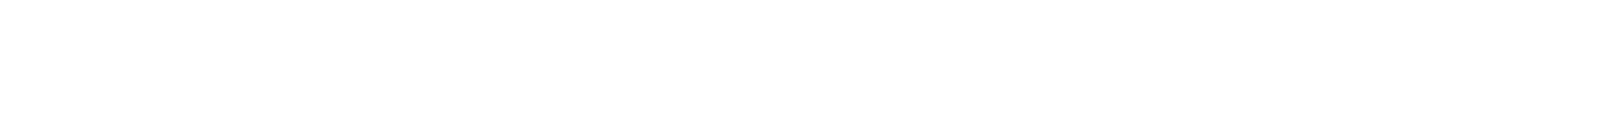 NSX@2x_Web5_test4.png